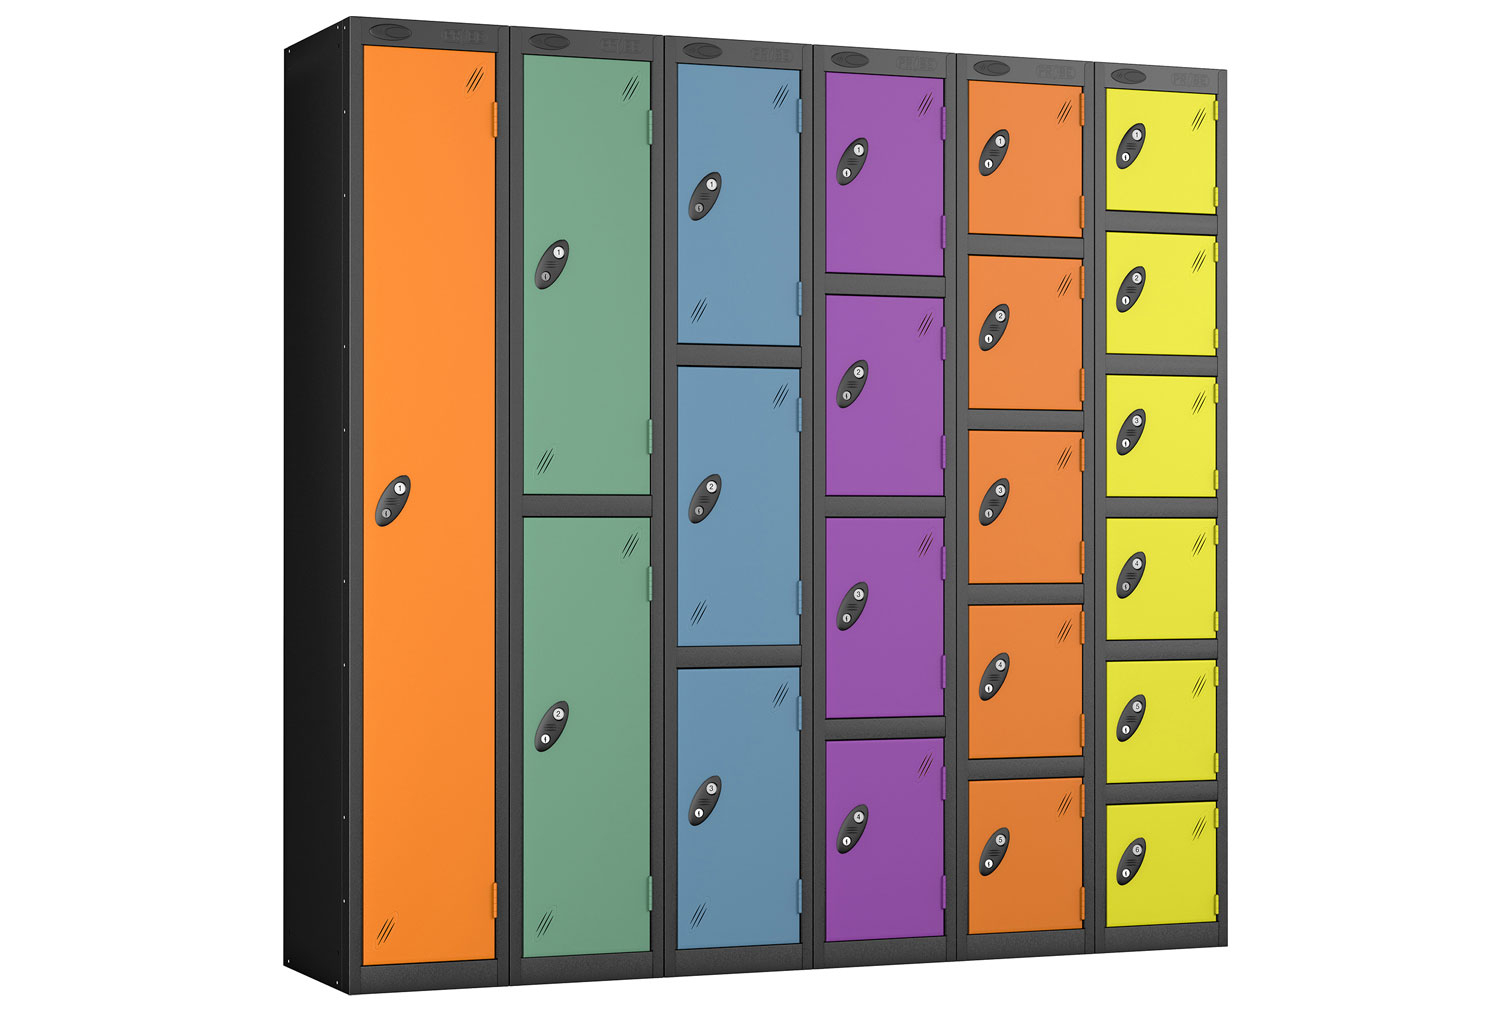 Probe Autumn Colour Lockers With Black Body , 2 Door, 31wx46dx178h (cm), Hasp Lock, Black Body, Jade